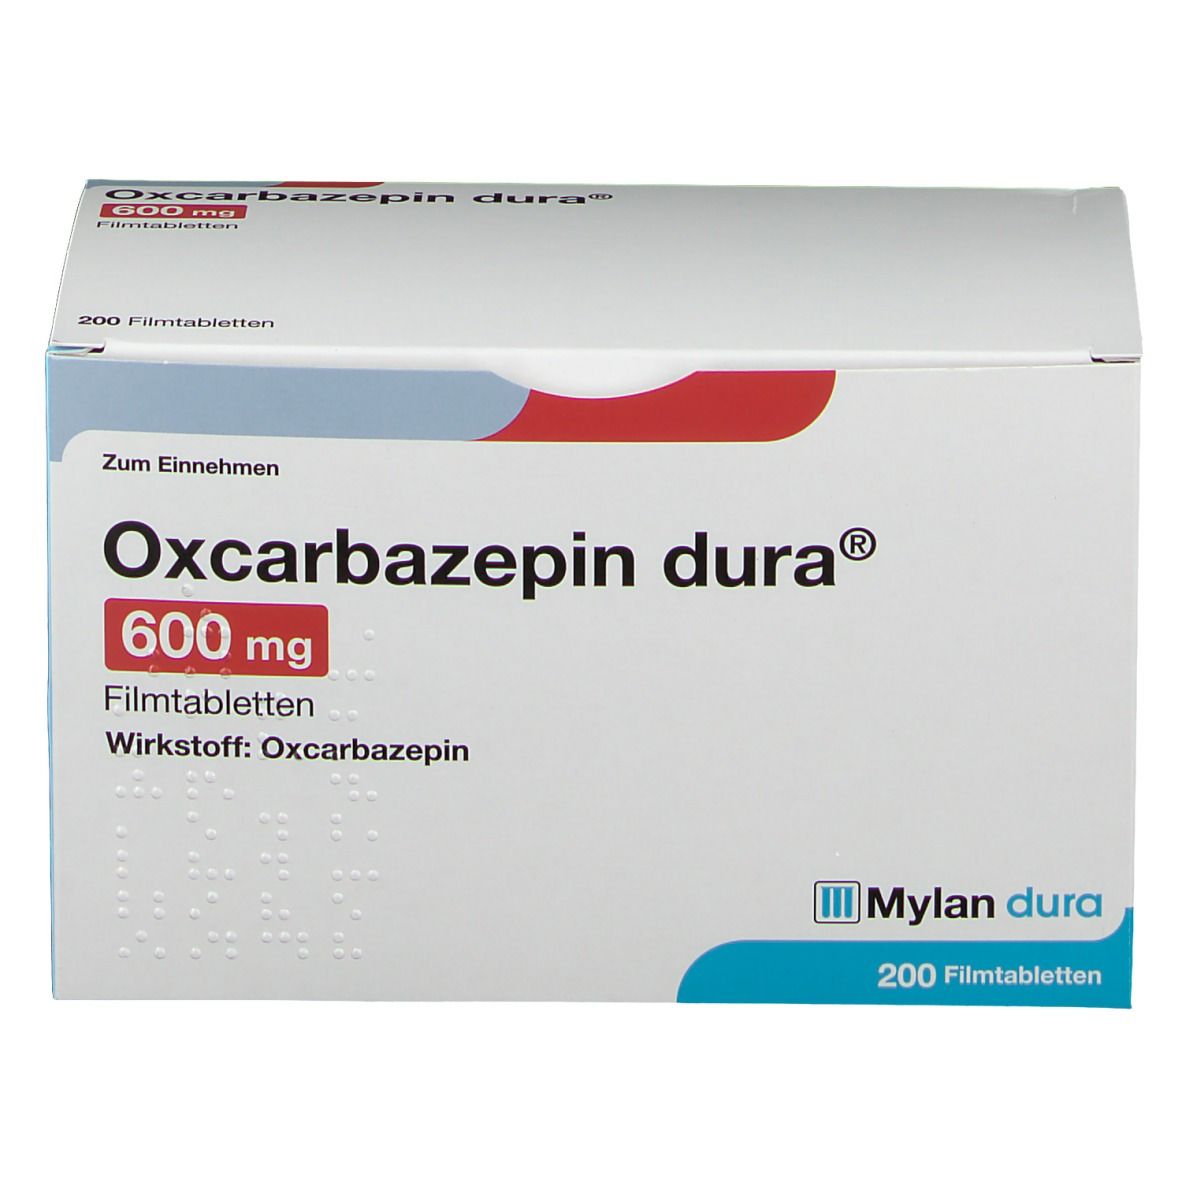 Oxcarbazepin dura® 600 mg